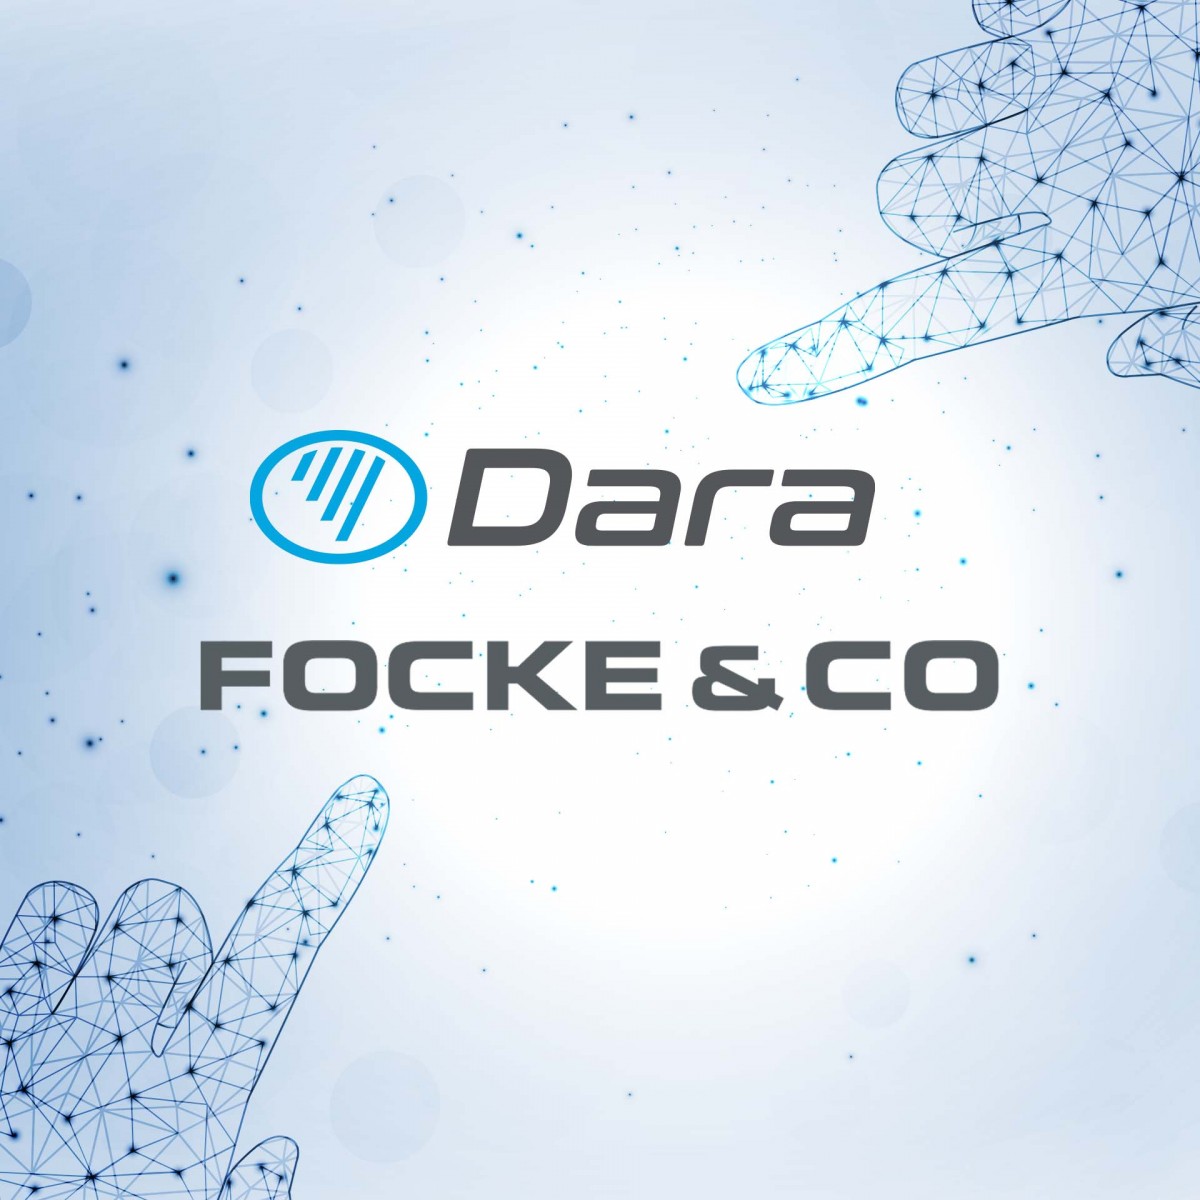 DARA and FOCKE increase their association. 